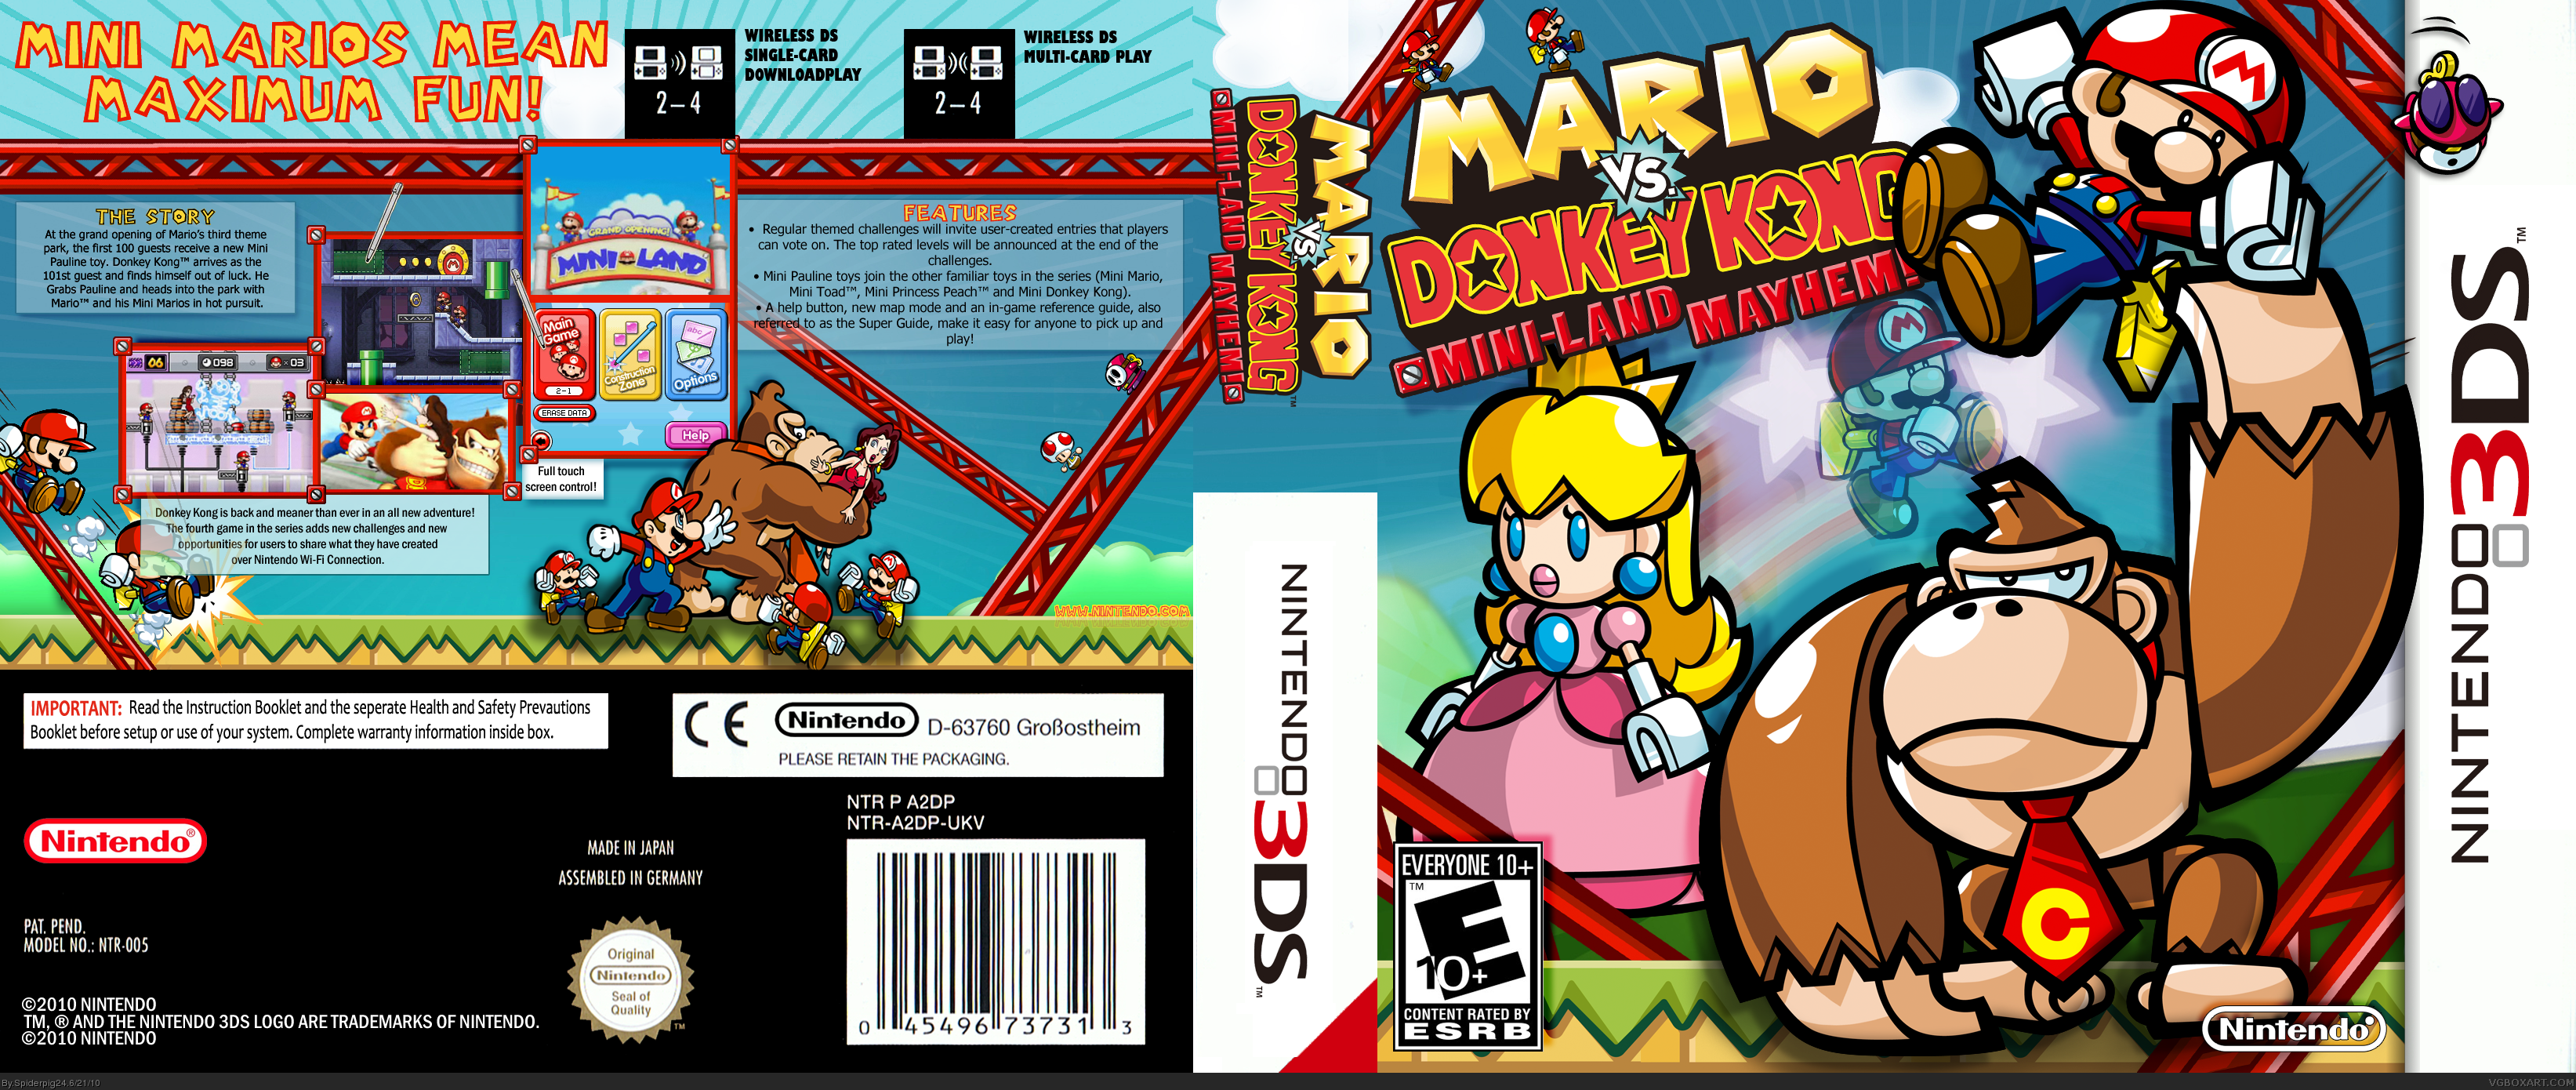 Mario vs donkey kong nintendo switch. Donkey Kong vs Mario игра. Mario vs. Donkey Kong: Mini-Land Mayhem!. Mario vs Donkey Kong 3ds. Mario vs. Donkey Kong game boy.